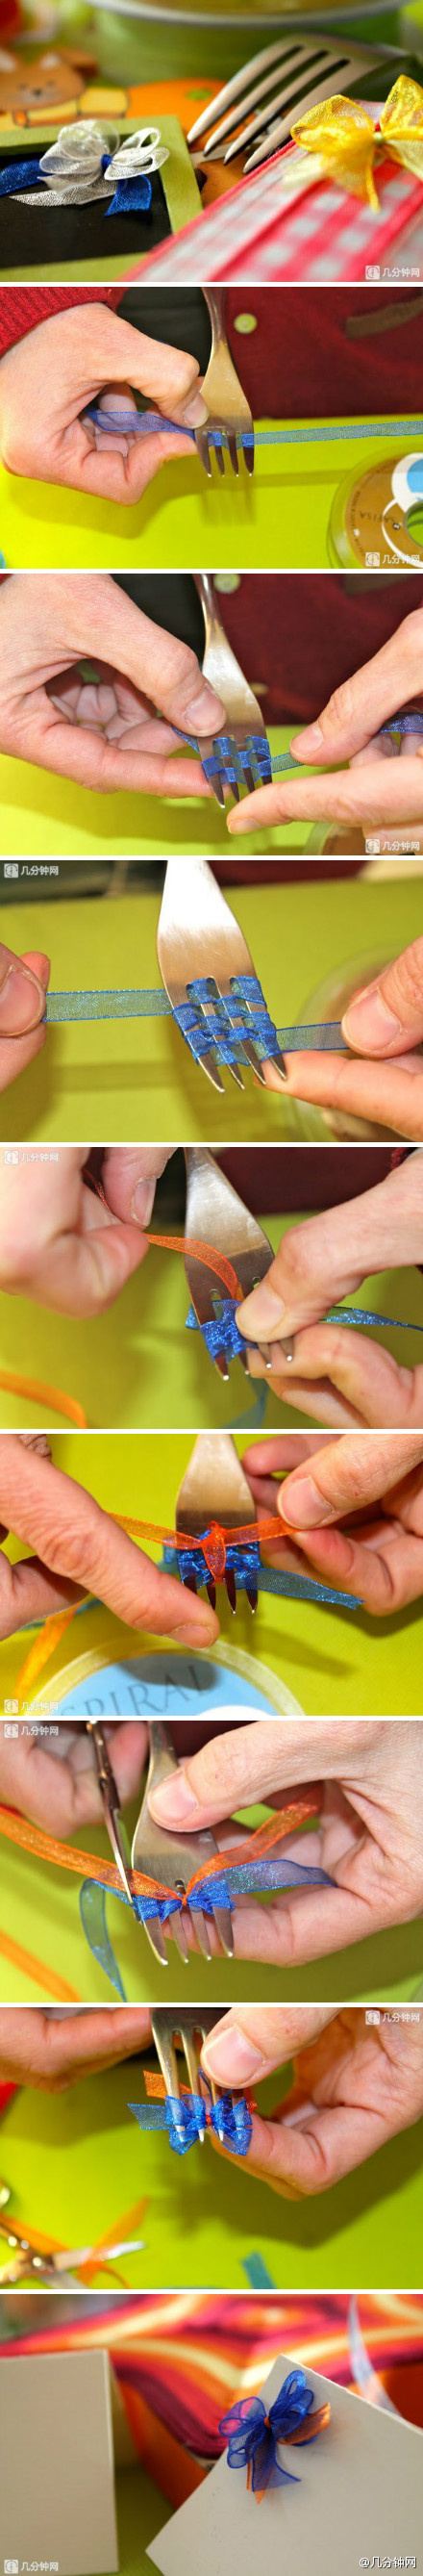 DIY tiny bows 16 Brilliant and Easy DIY Ideas